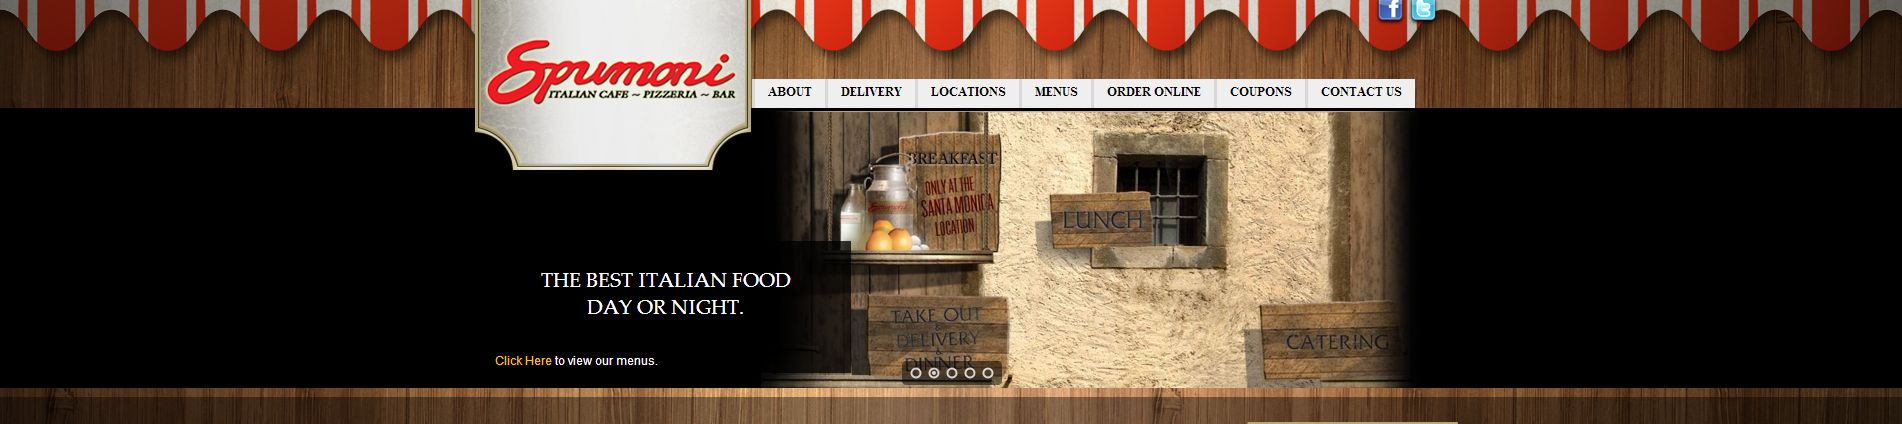 spumoni restaurant website